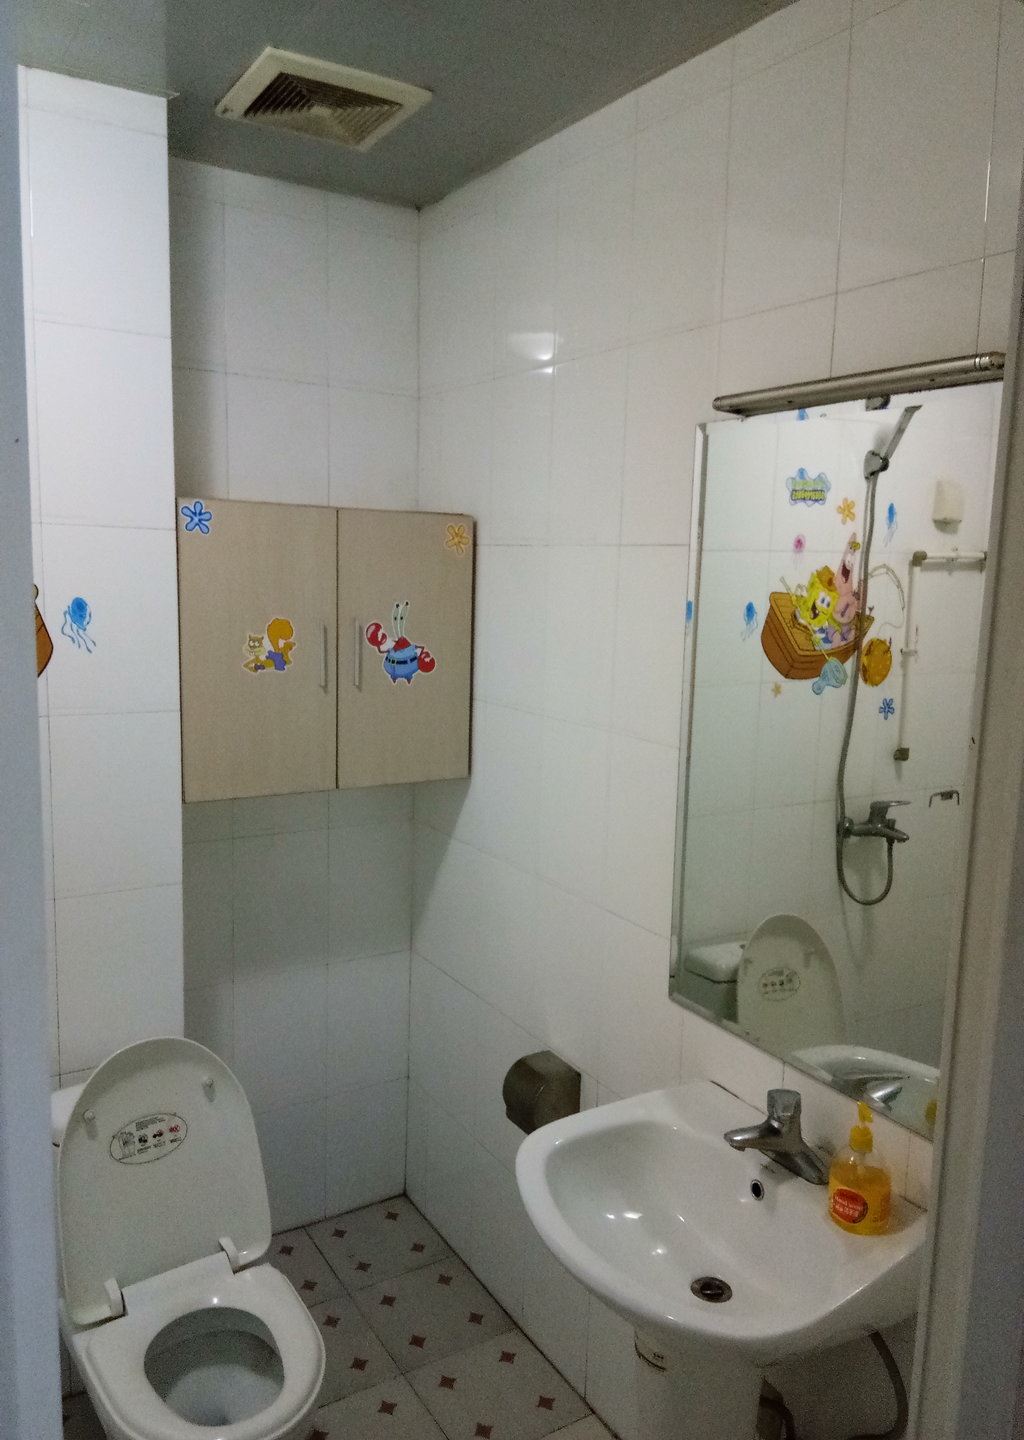 bathroom with leak